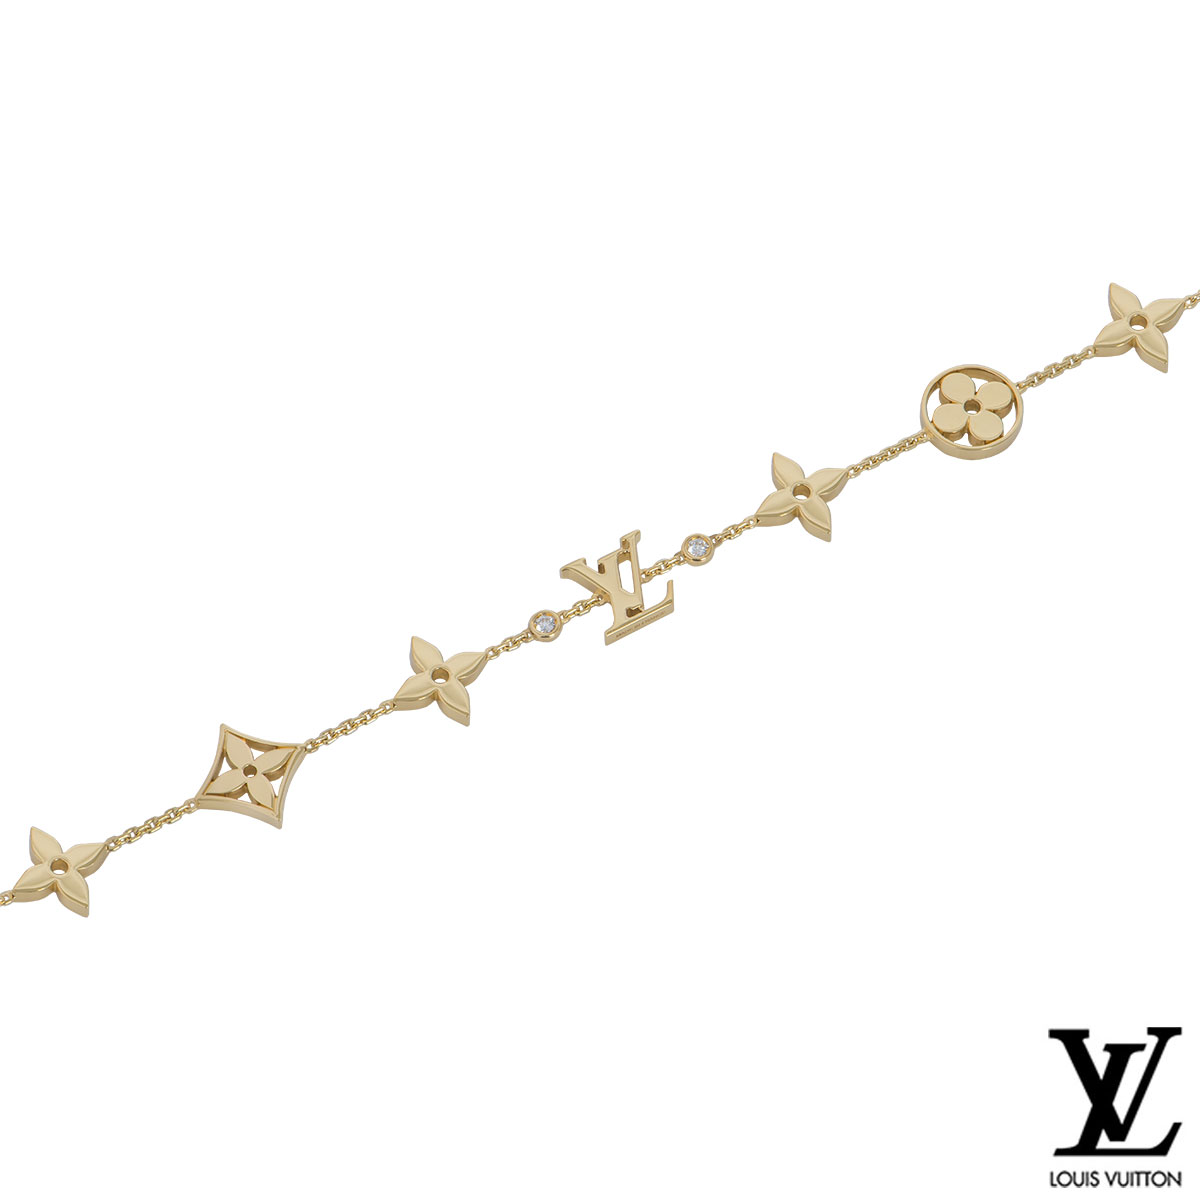 Louis Vuitton Idylle Blossom Twist Bracelet, Yellow Gold and Diamonds Gold. Size L